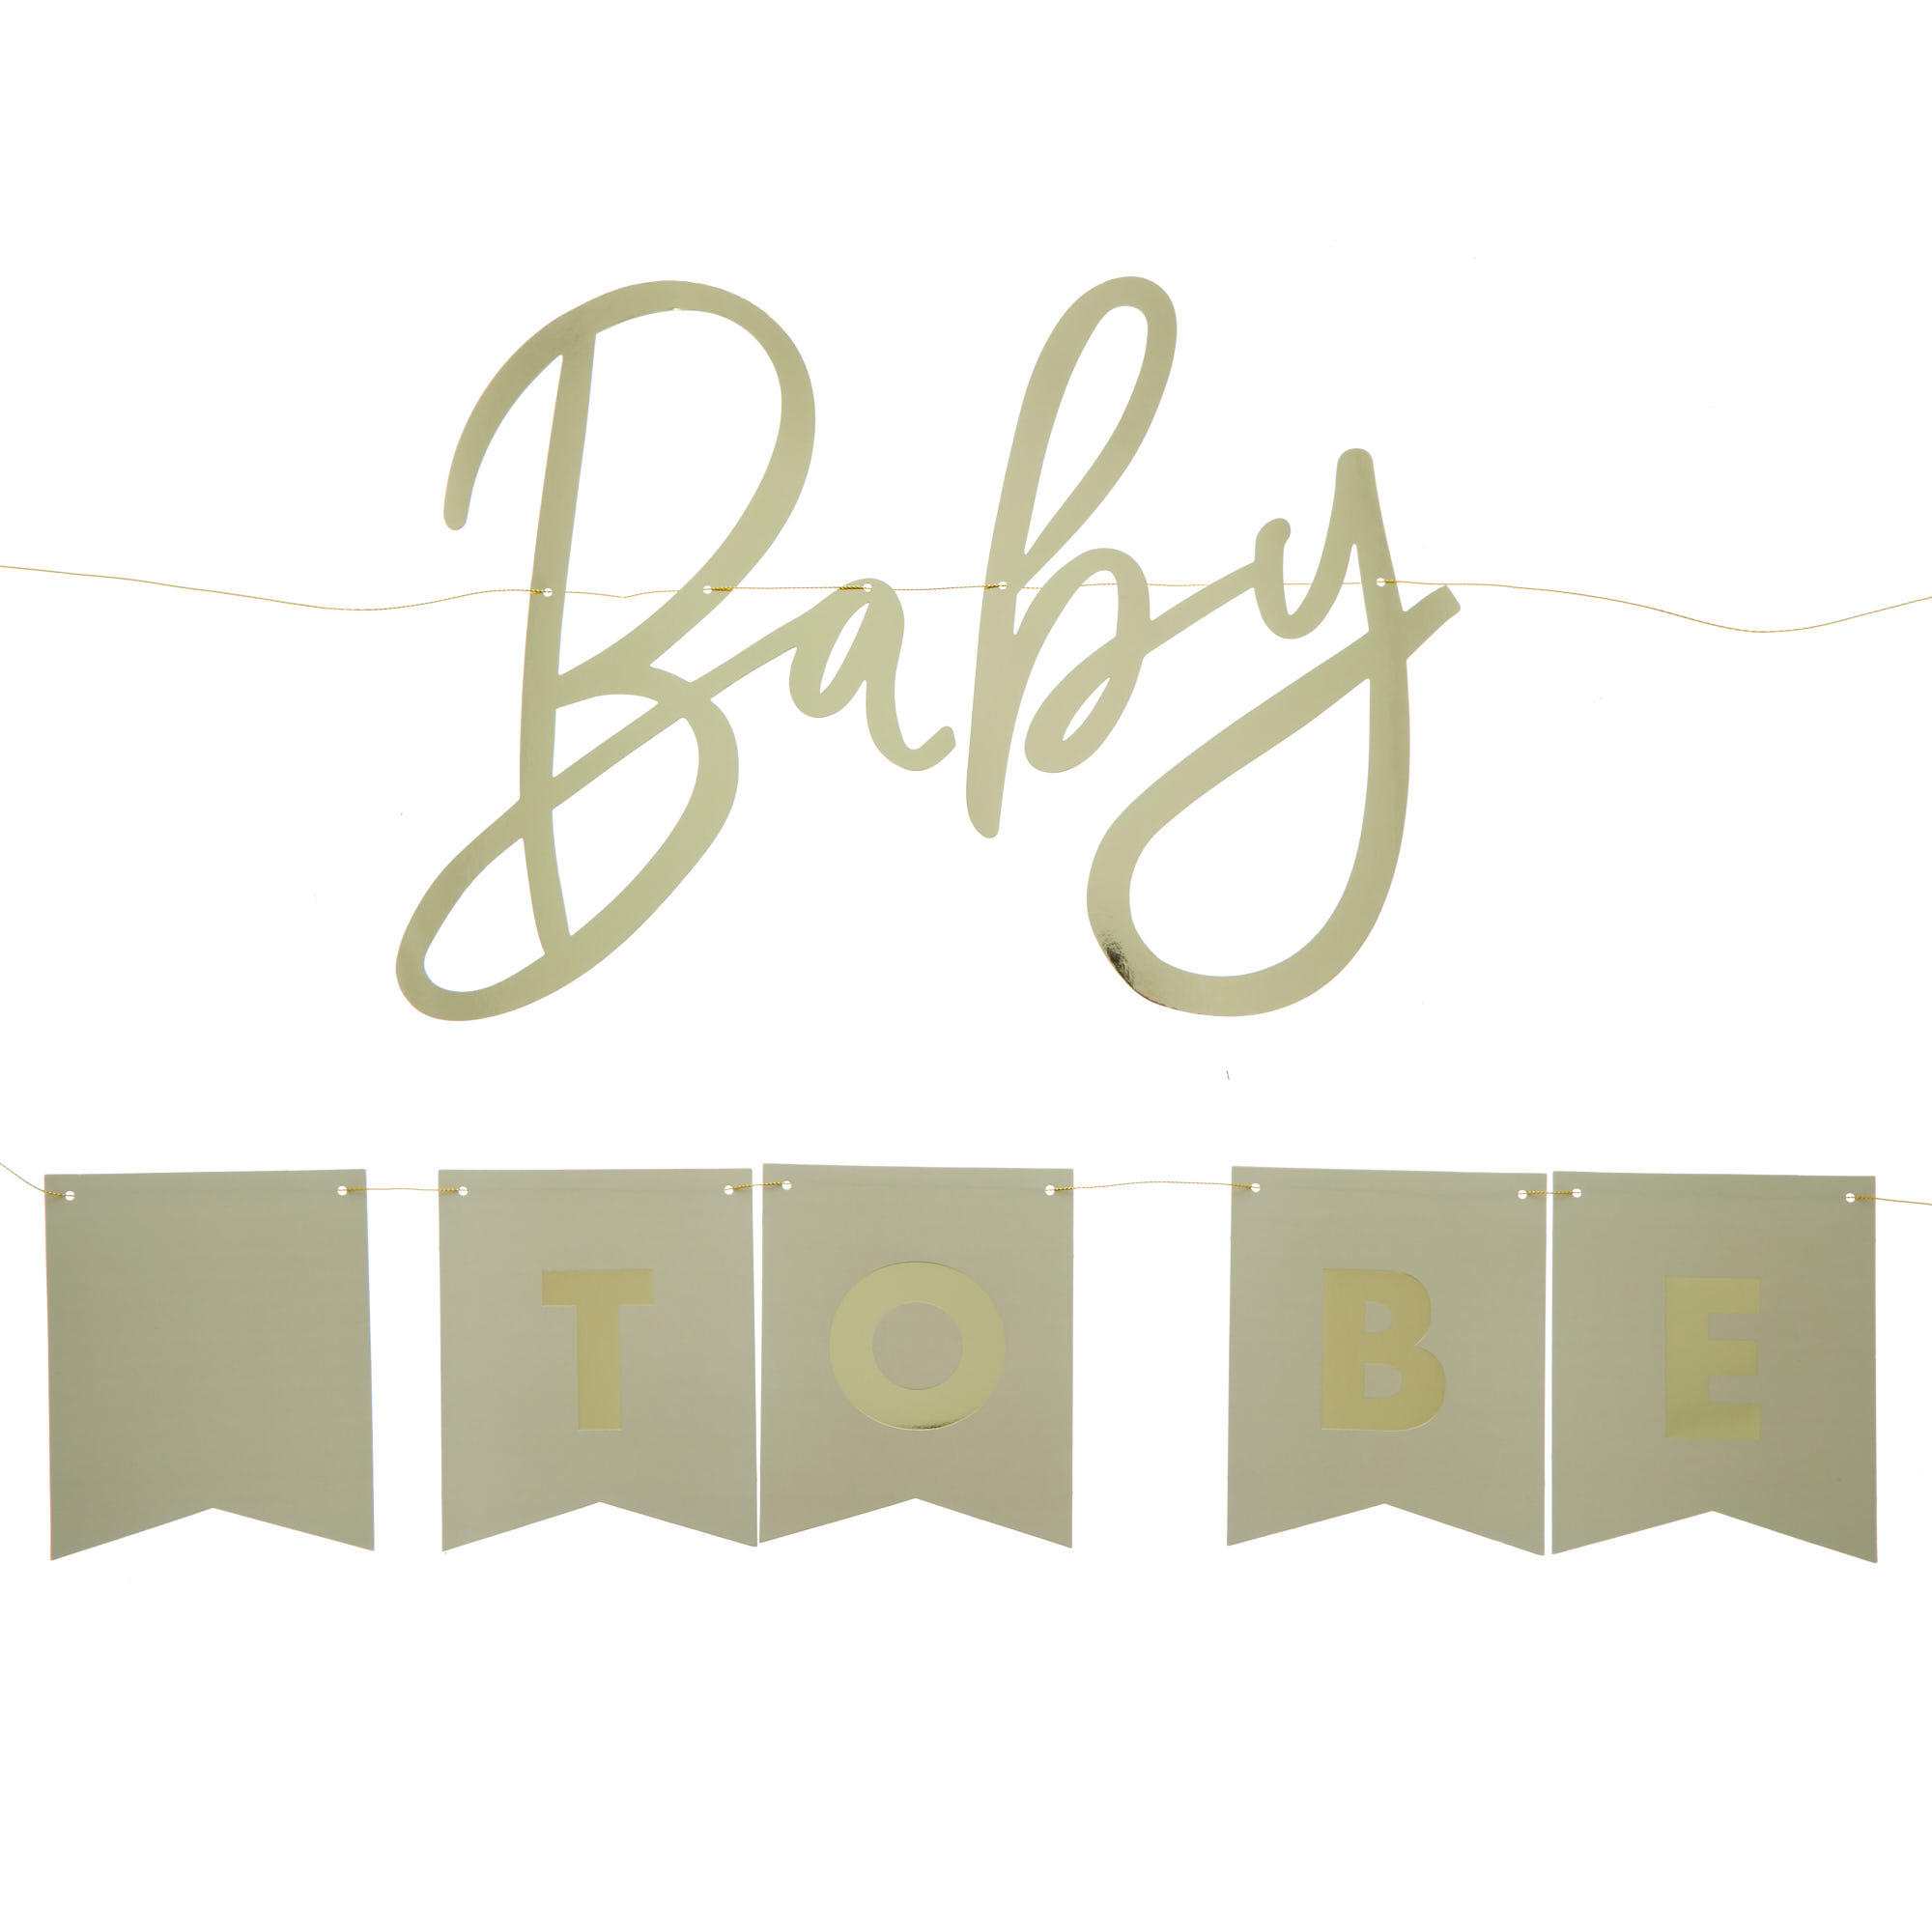 Sage Unisex Baby Shower Party Tableware & Decorations Bundle - 8 Guests